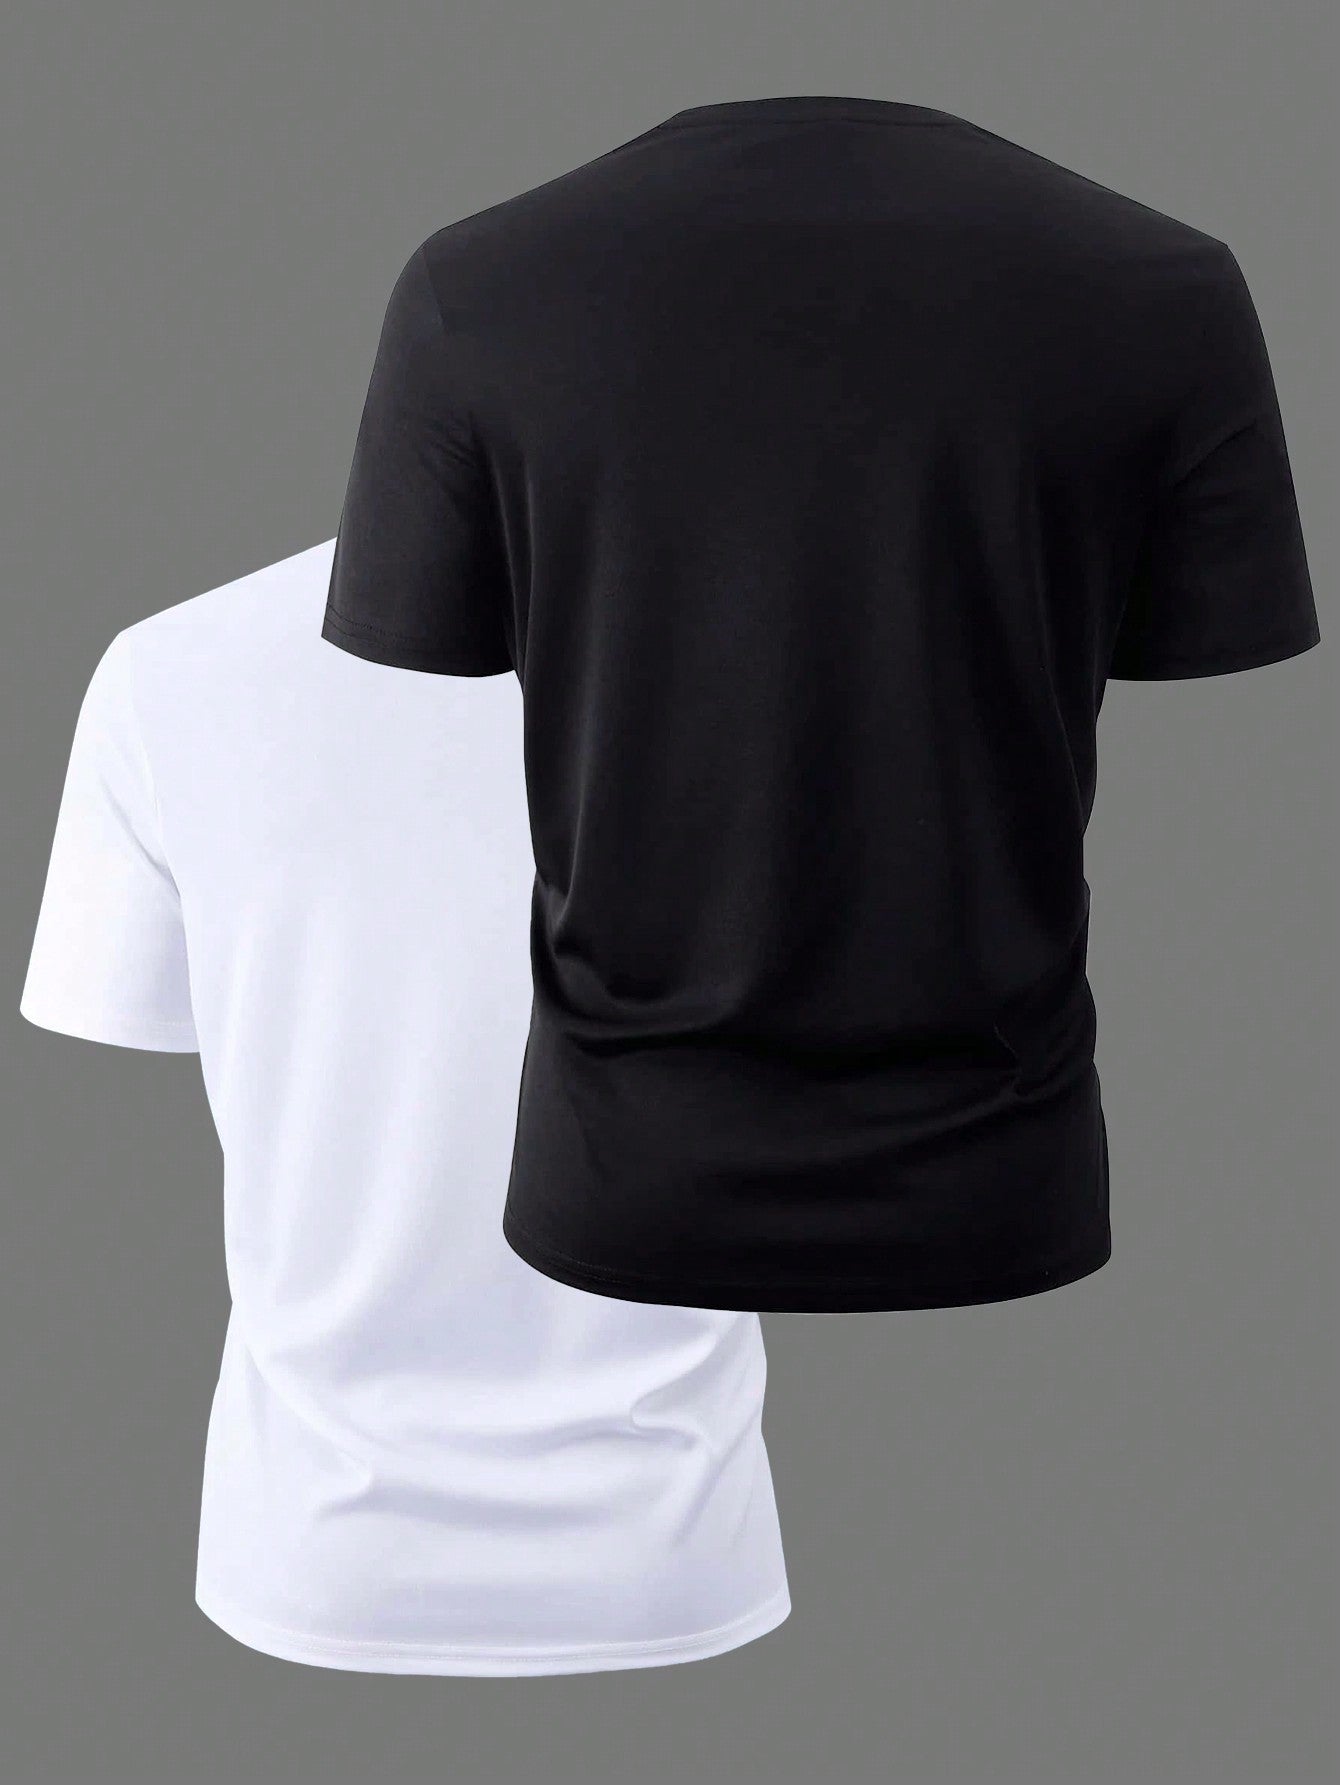 Men's Stylish Casual T Shirt.